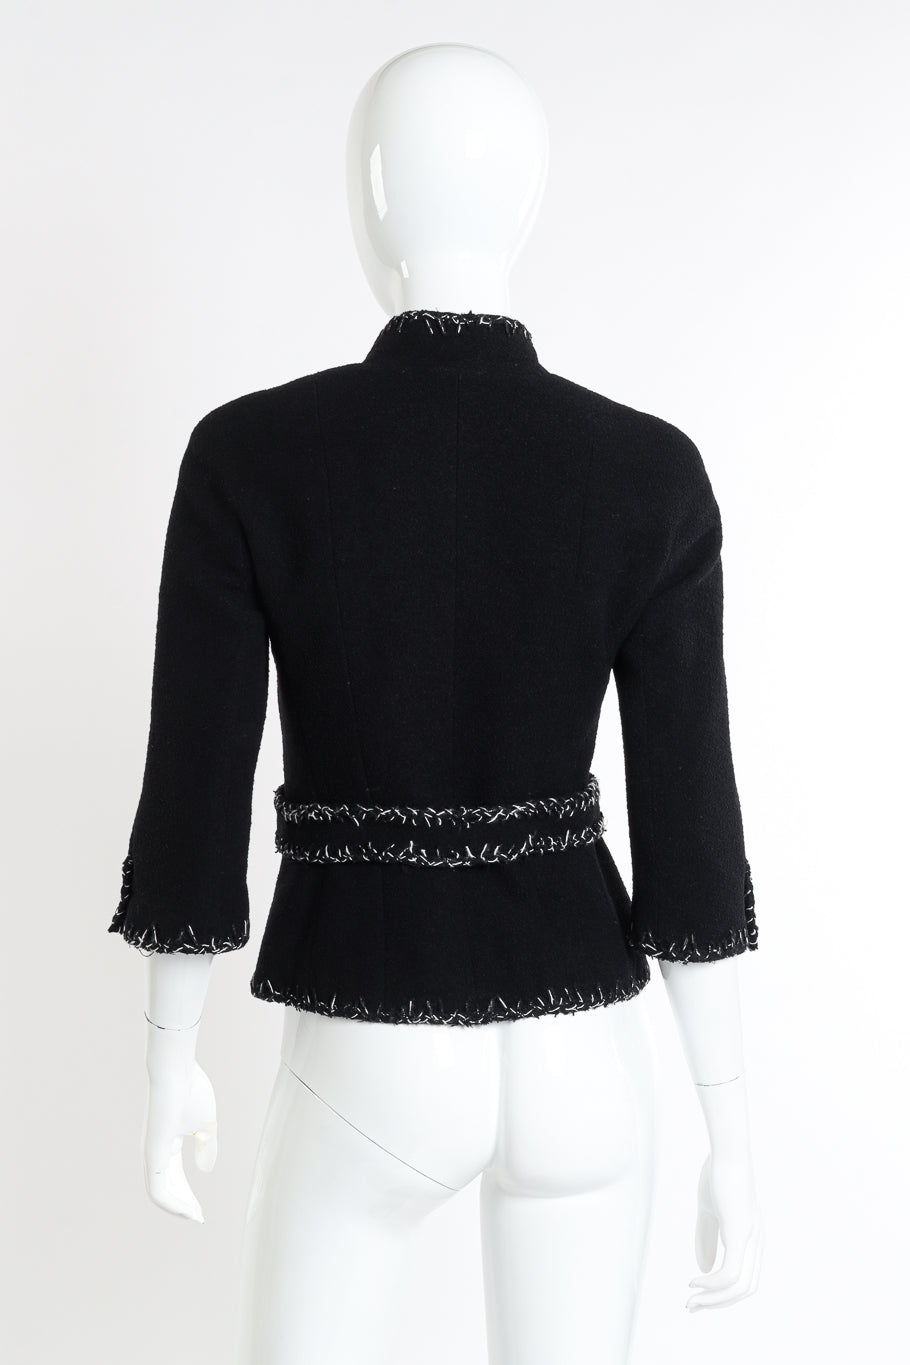 Chanel 2008 S Woven Stitch Trim Jacket back on mannequin @recessla